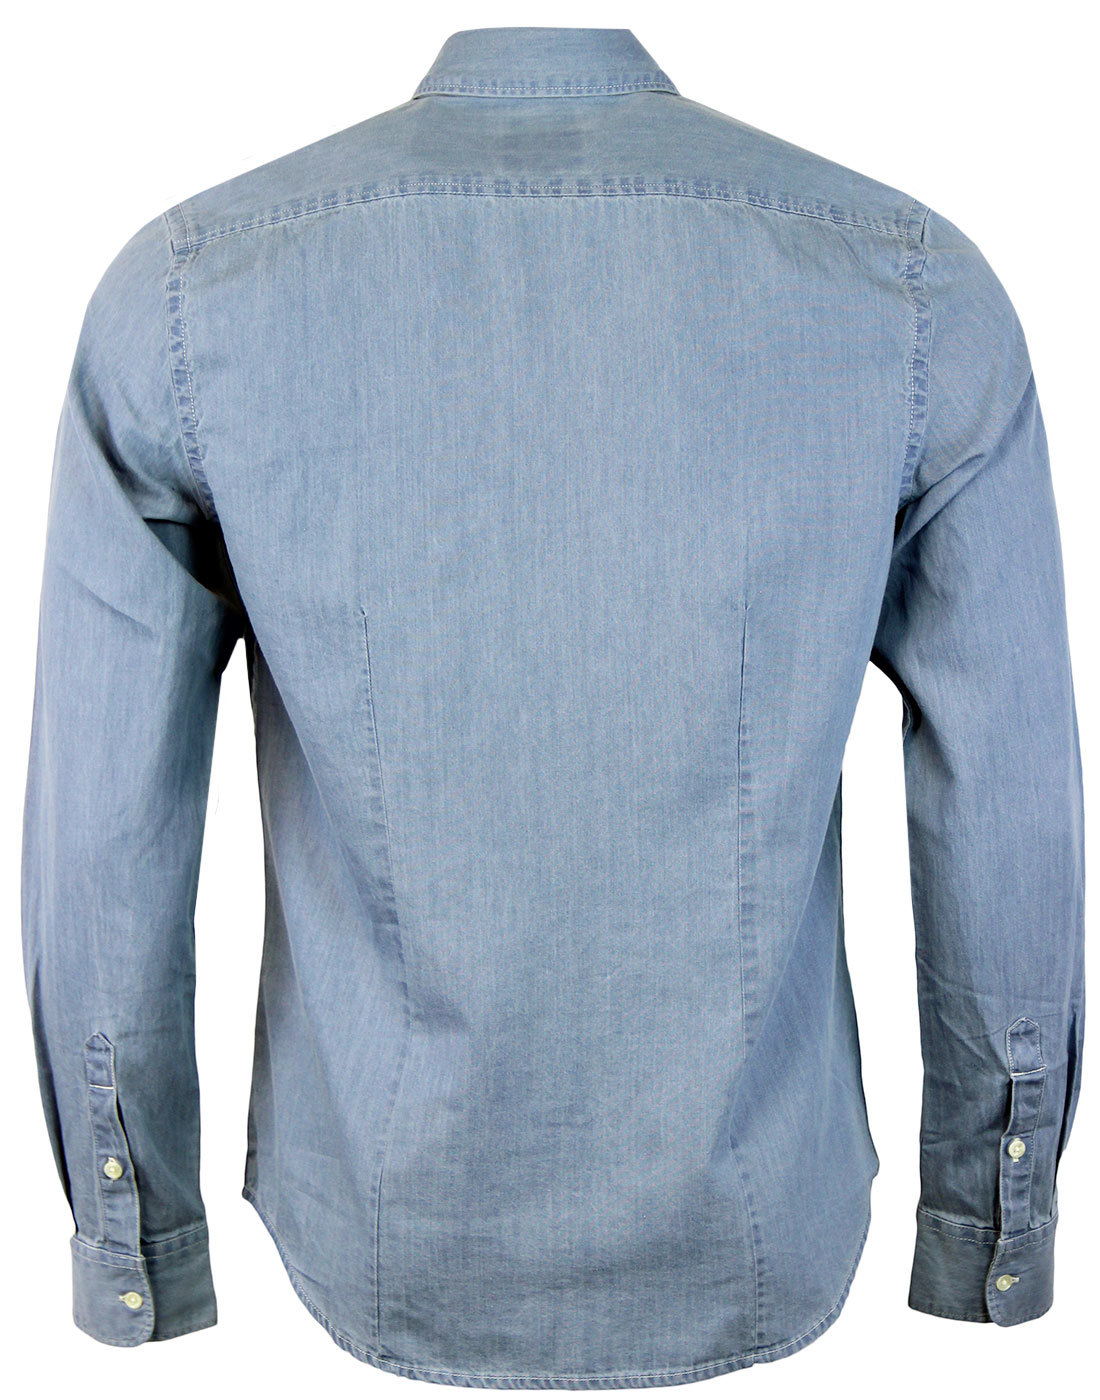 WRANGLER Men's Retro Mod 1 Pocket Button Down Chambray Shirt